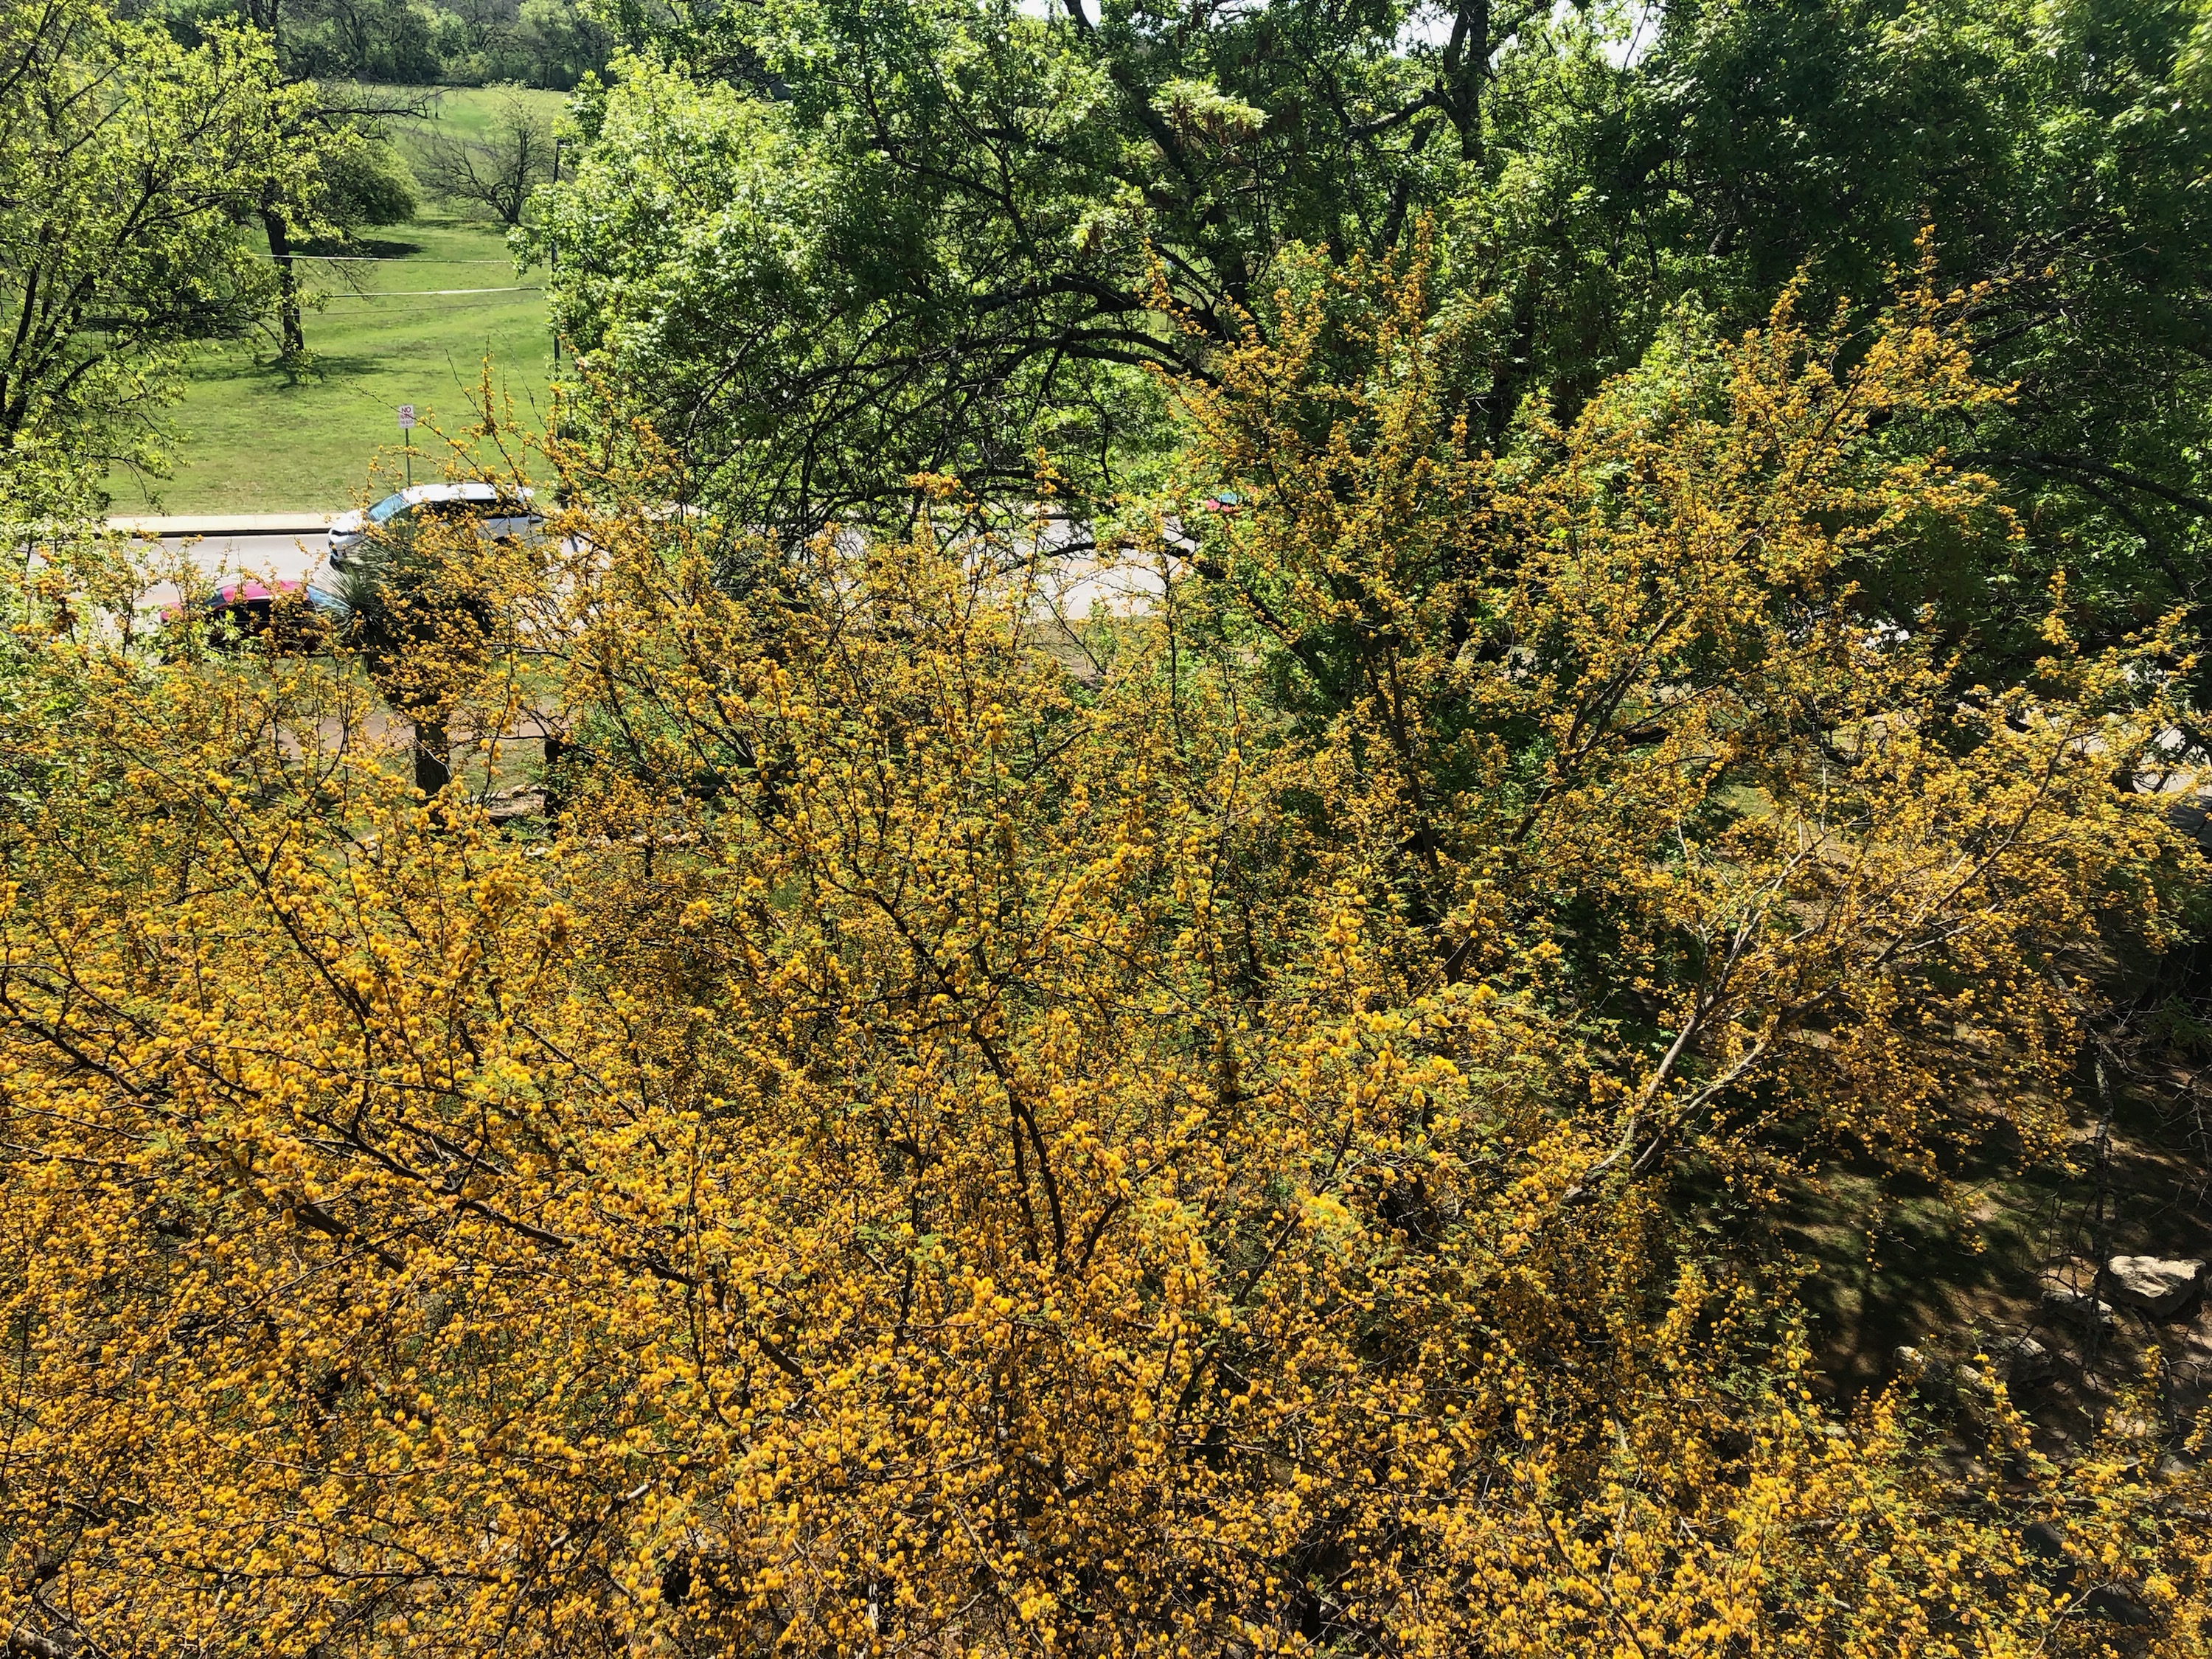 A yellow flowering huisache tree taken below a balcony.